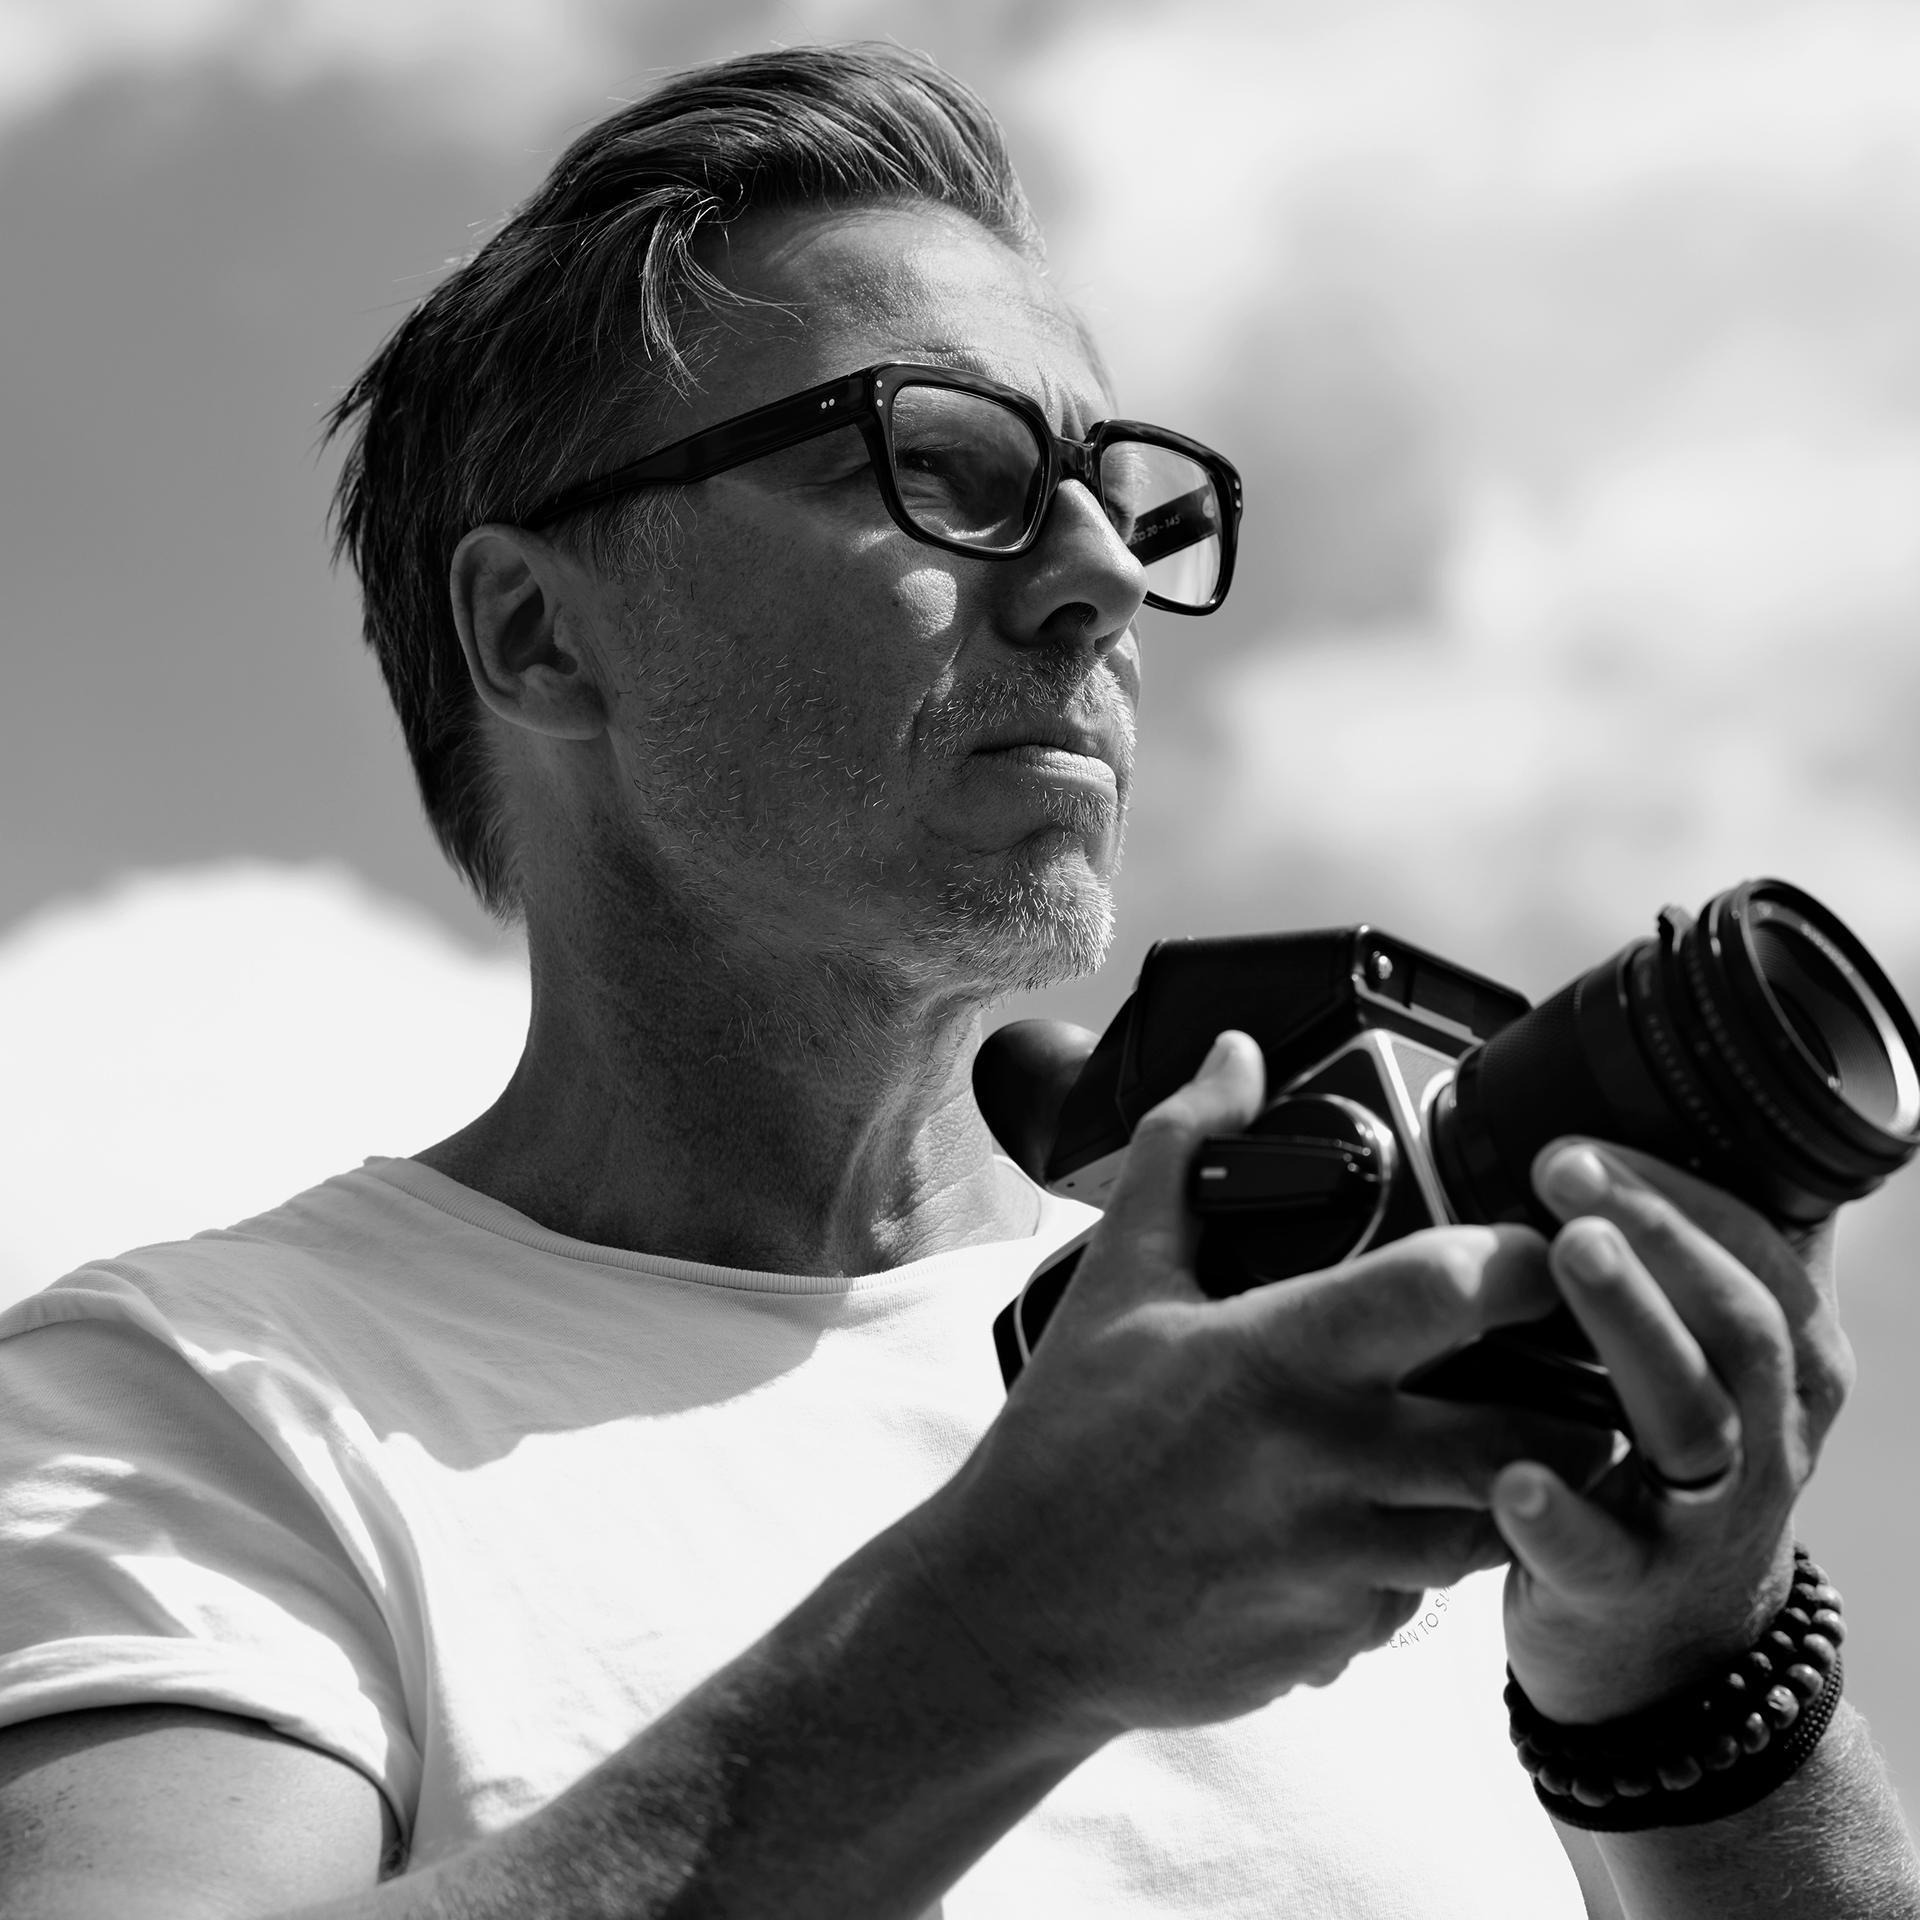 Fotograf Olaf Heine – „Mich interessiert der Mensch hinter dem Porträt“